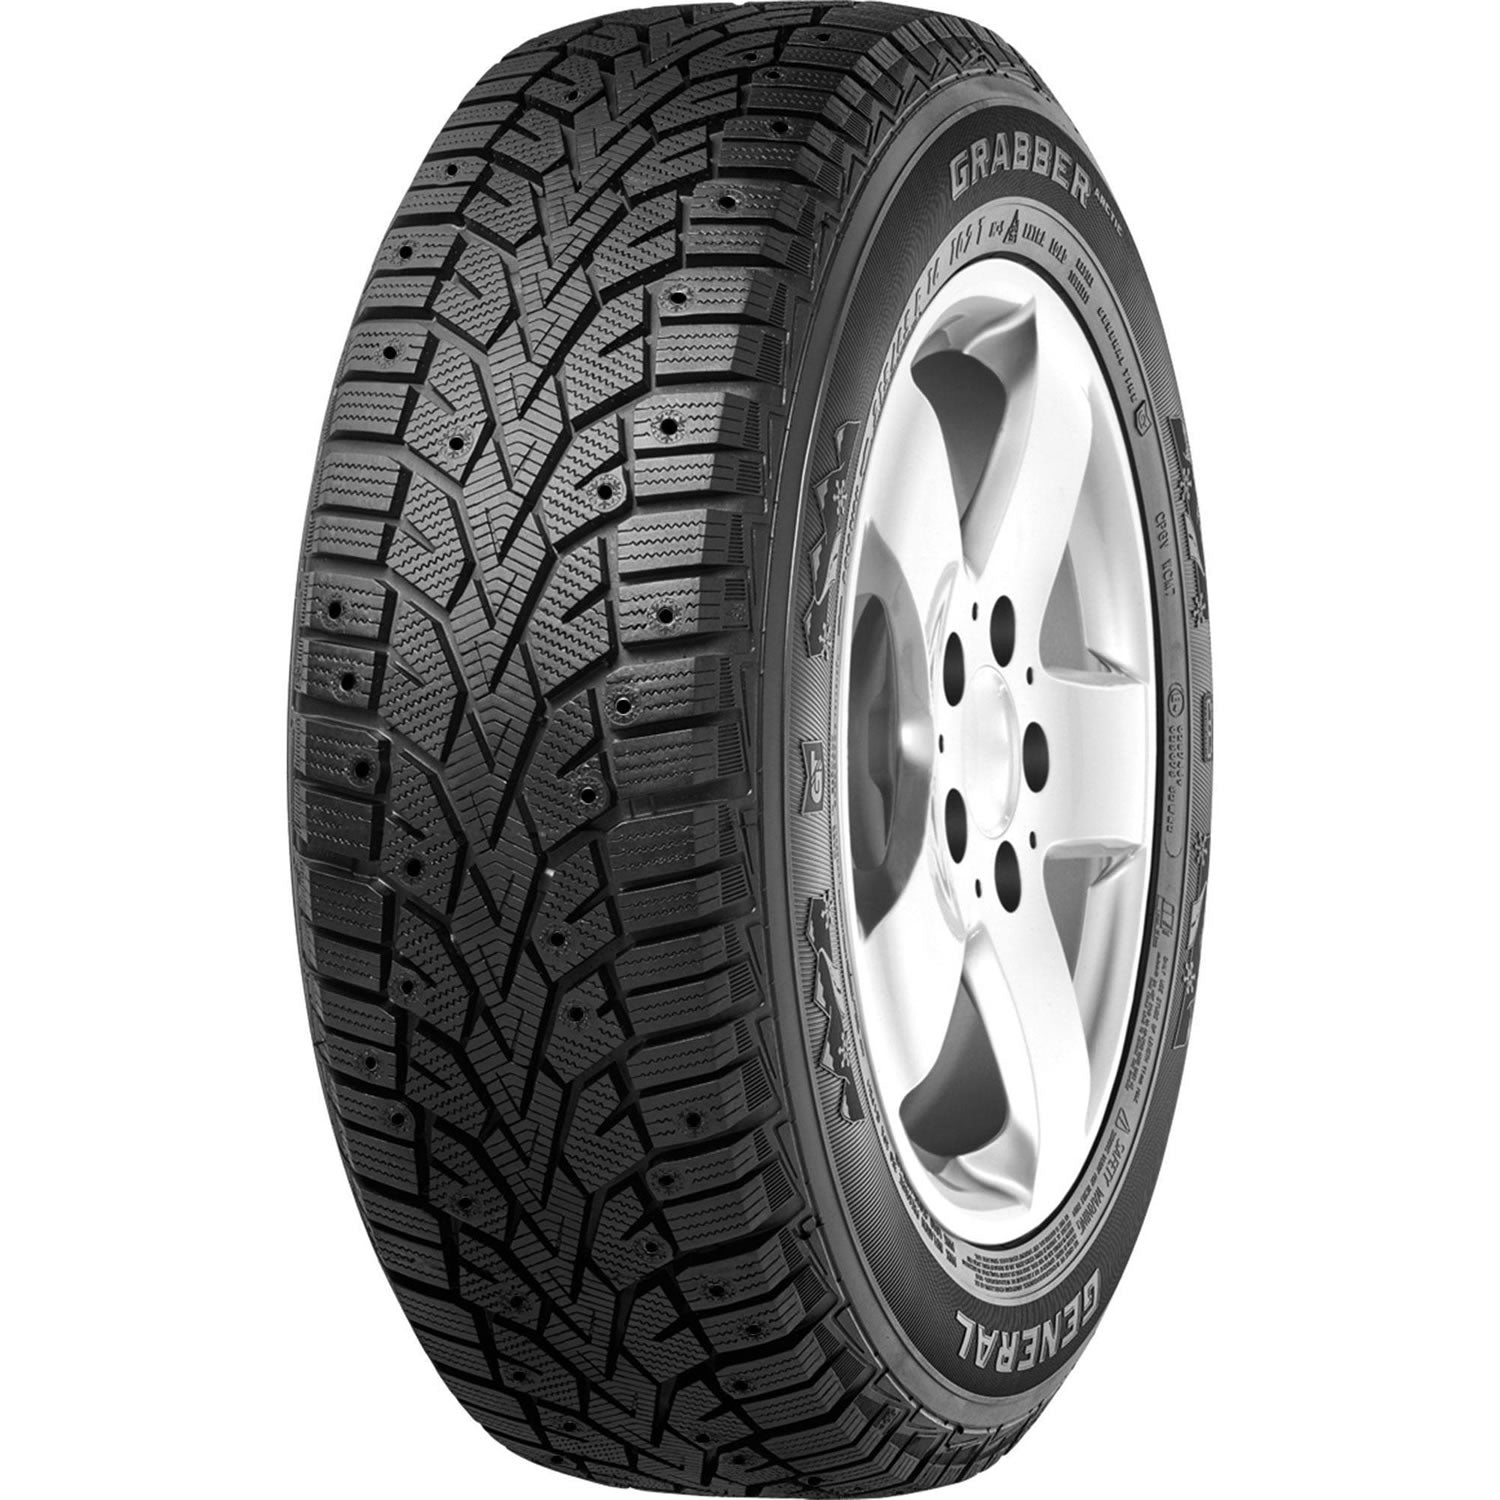 GENERAL GRABBER ARCTIC 265/60R18 (30.5X10.4R 18) Tires